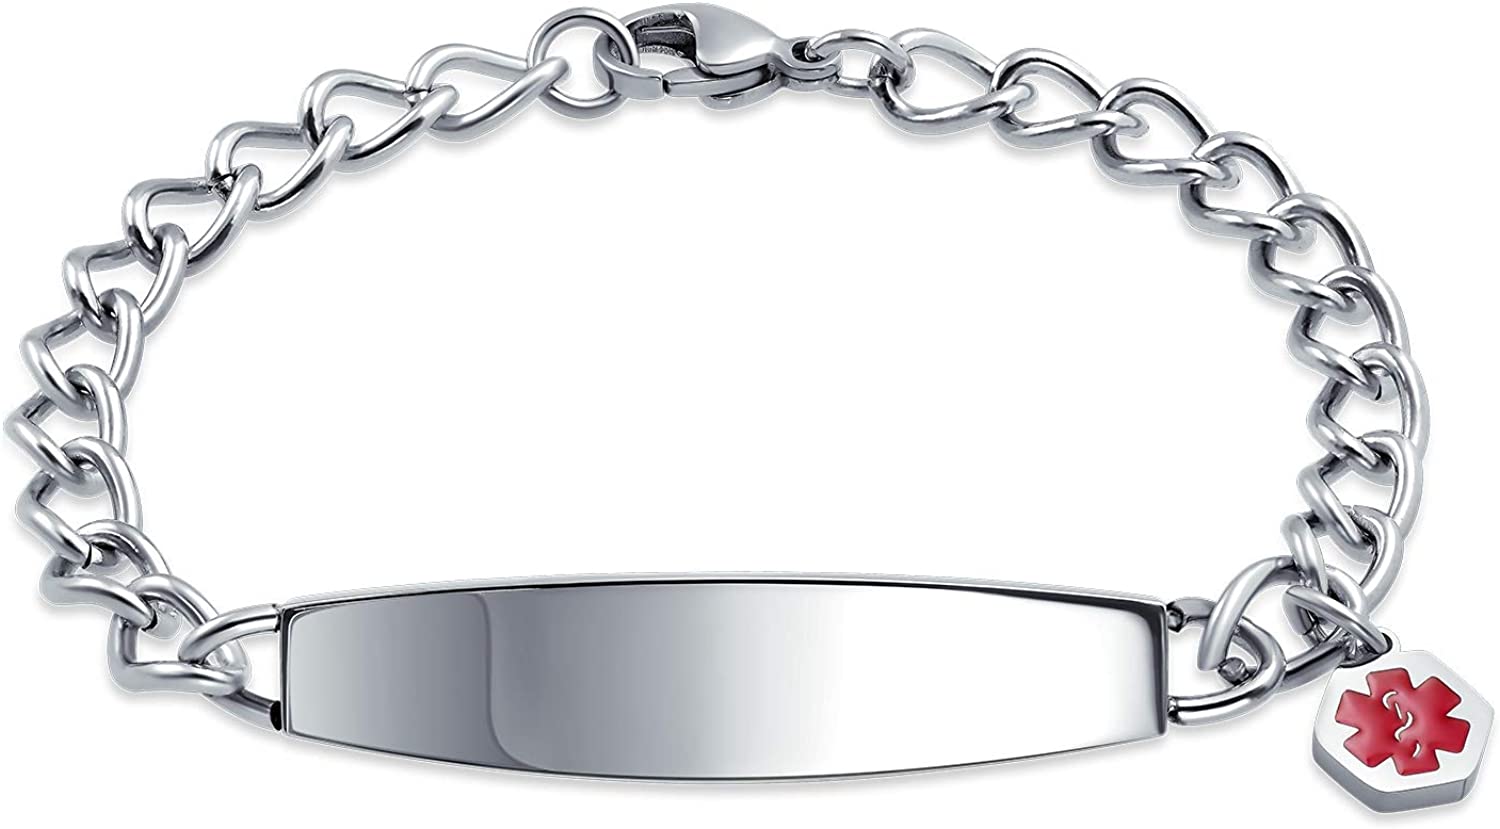 Bling Jewelry Identification Medical Alert ID Bracelet Blank Miami Cuban Link Chain for Women Silver Tone Stainless Steel 7.5, 8 Inch